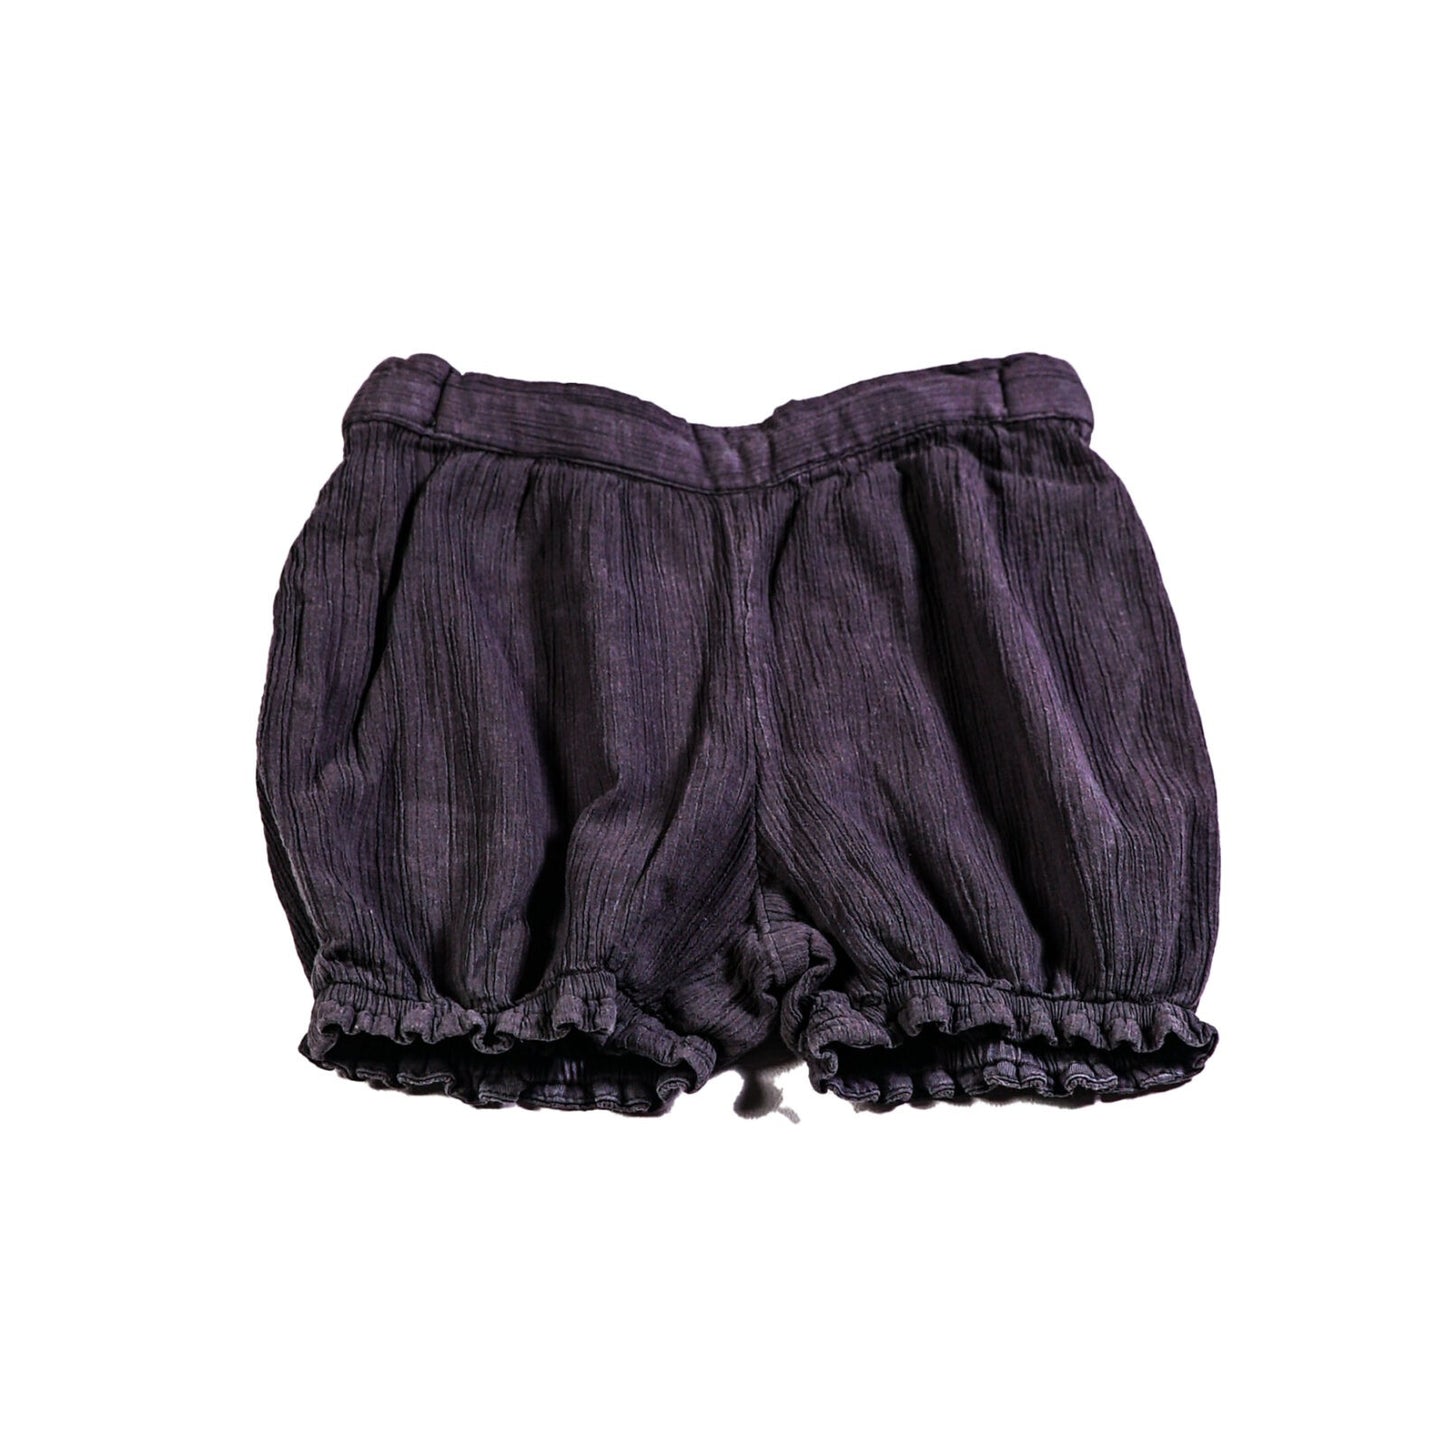 Light cotton bloomer shorts